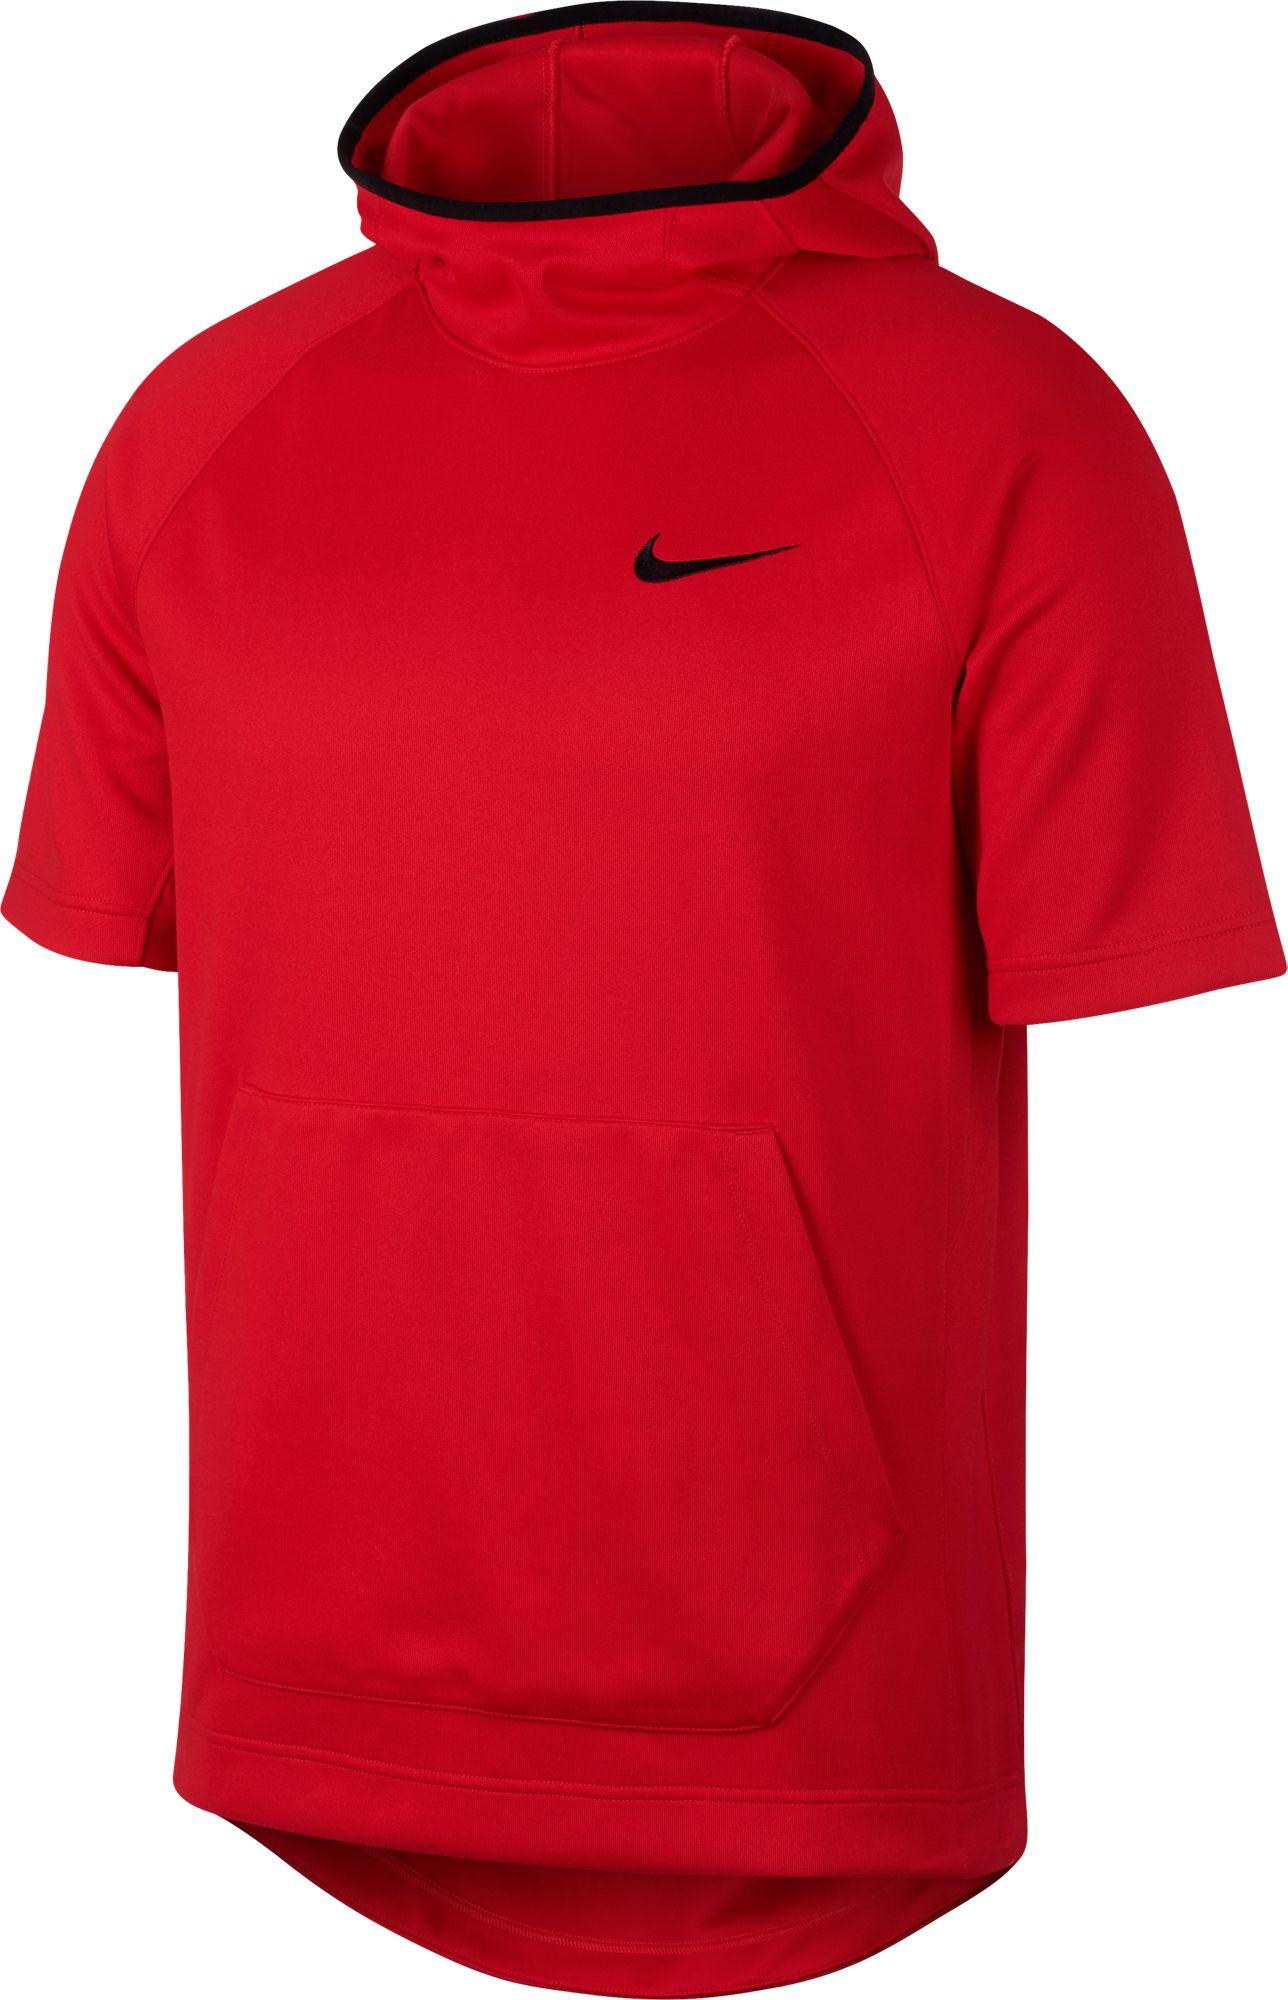 Nike Dri-fit Spotlight Short Sleeve Hoodie in Red for Men - Lyst